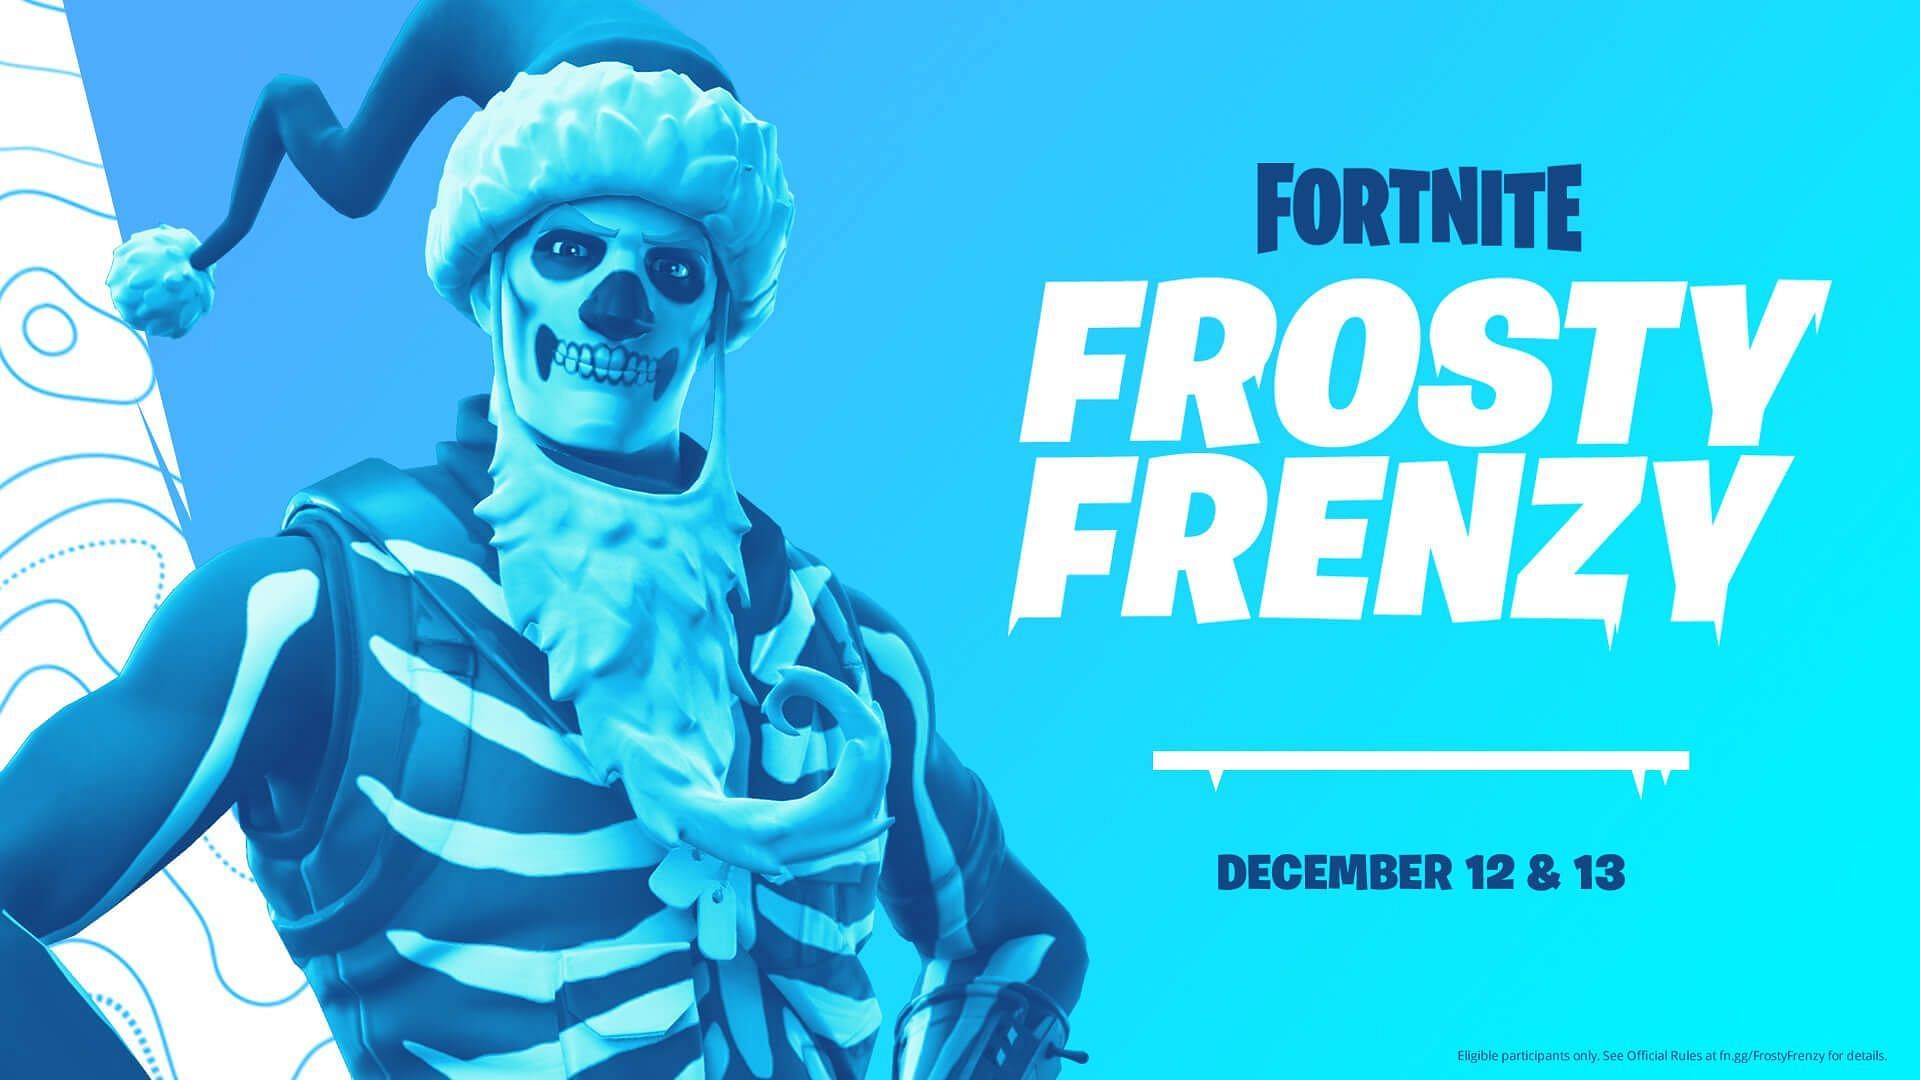 Fortnite Frosty Frenzy tournament 2021 (Image via Epic Games)